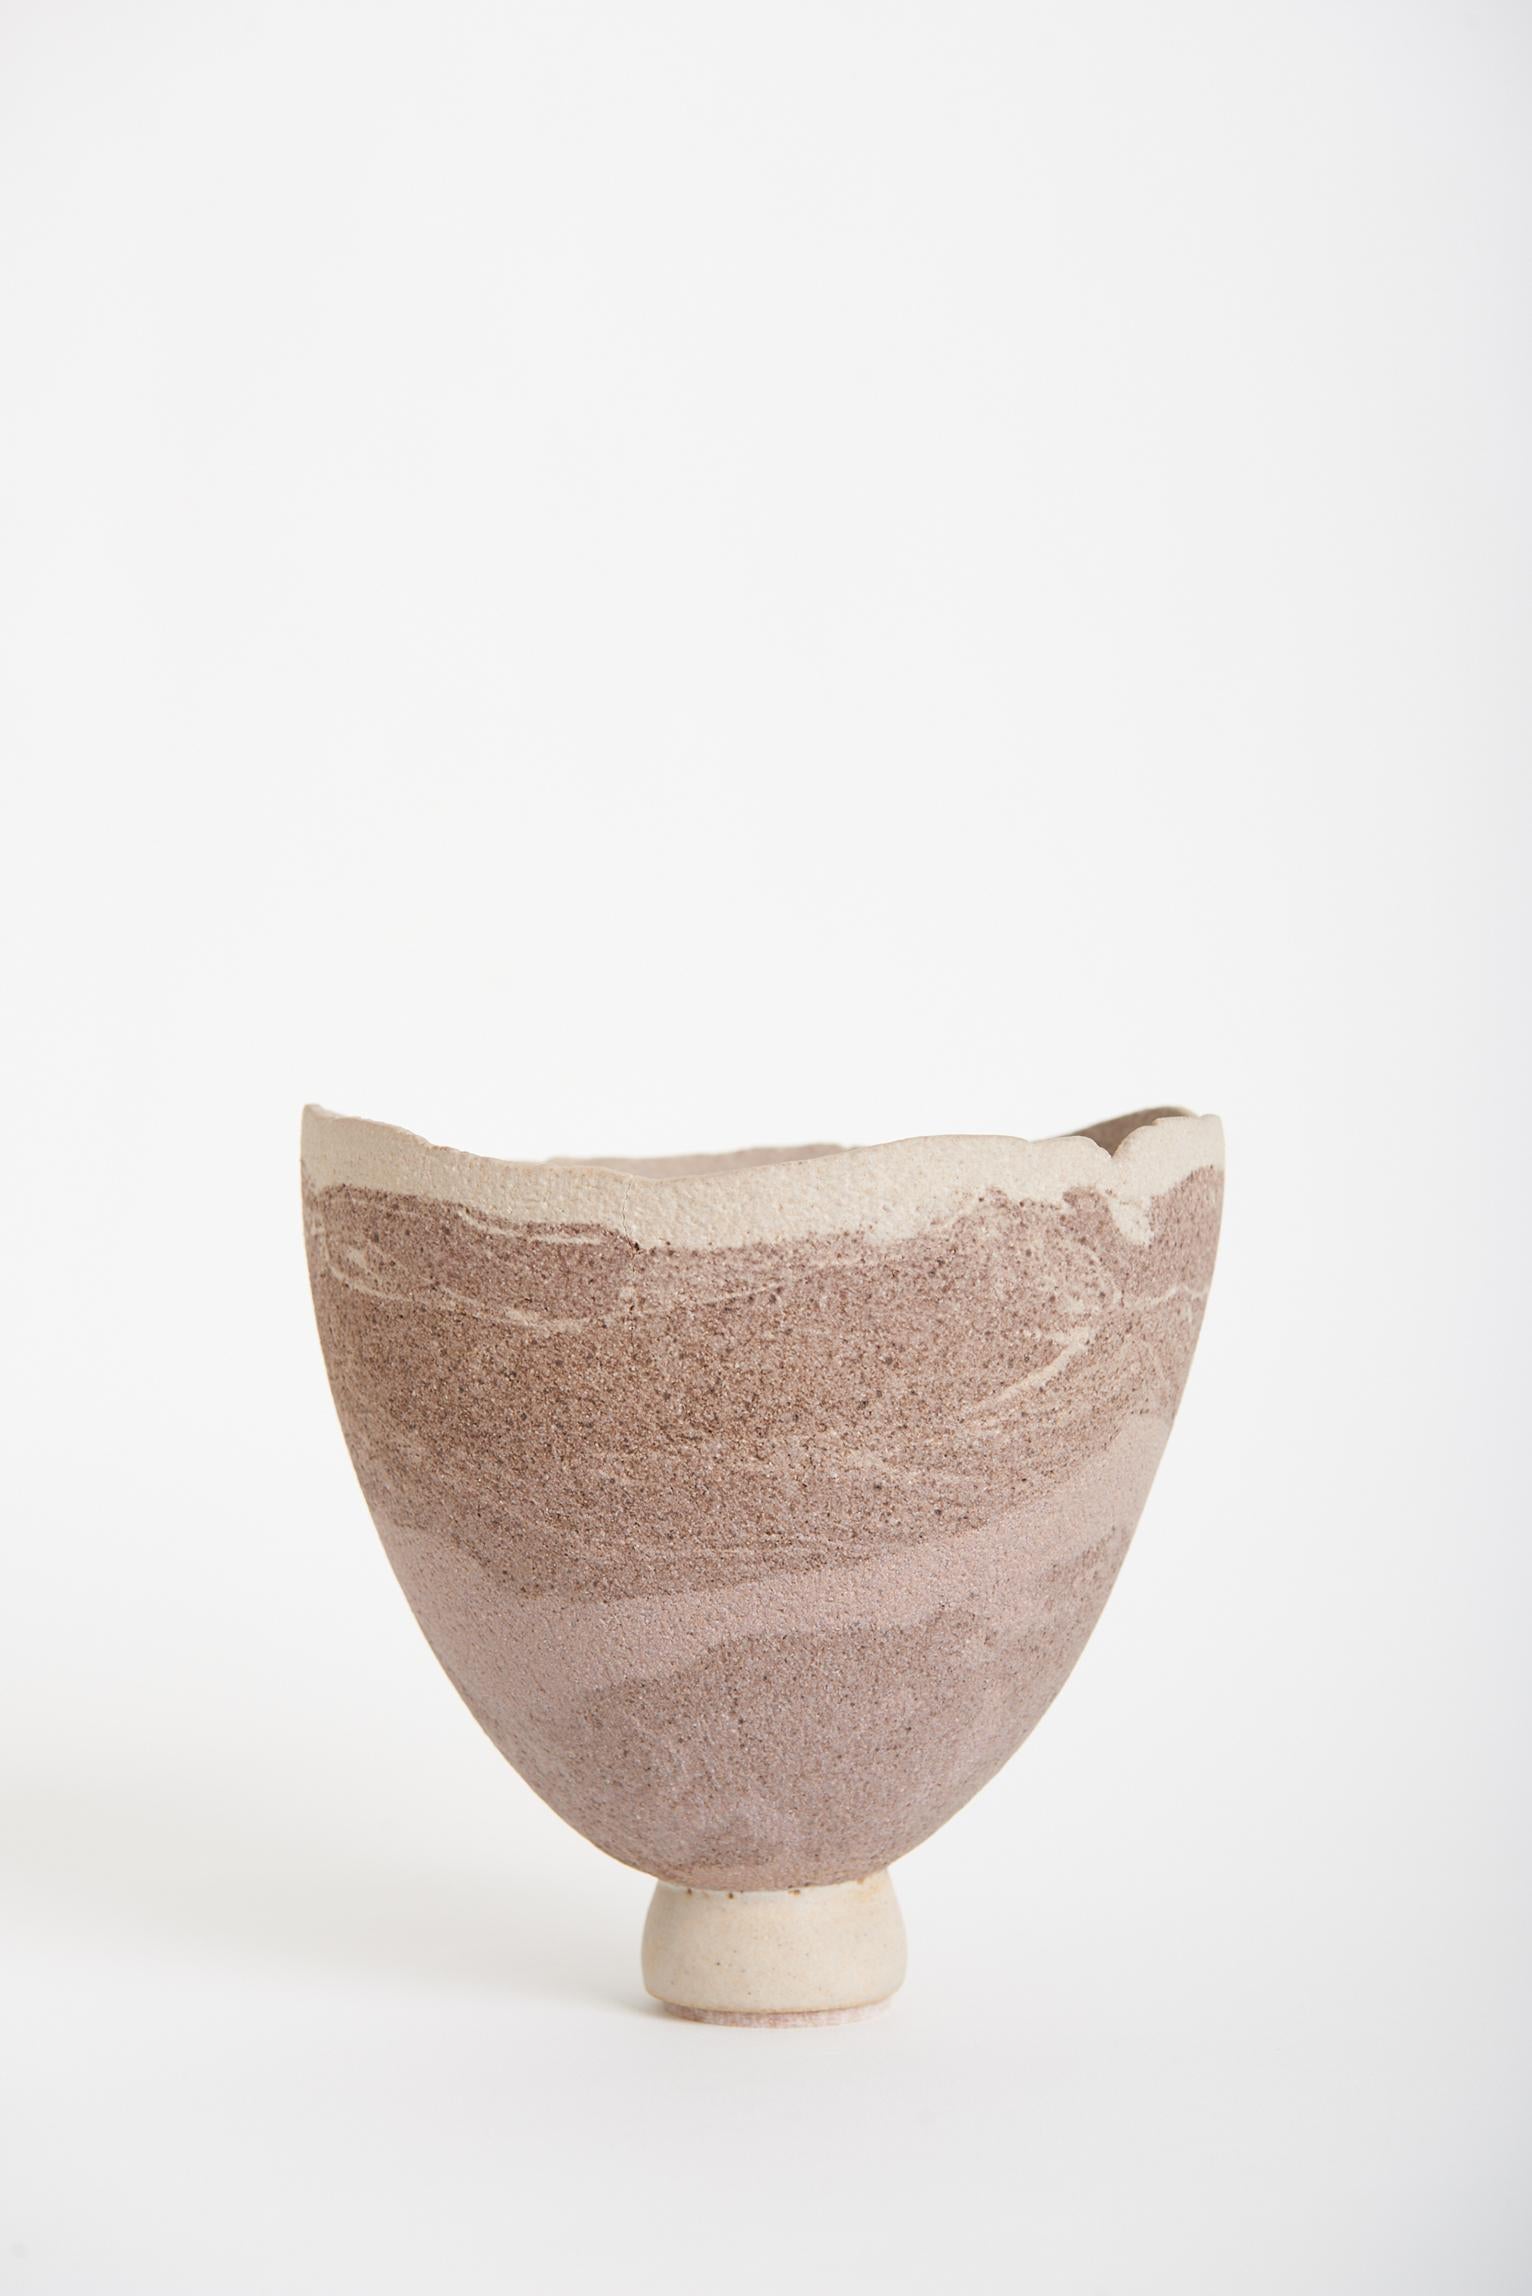 An unglazed studio ceramic vase.
England, 20th century.